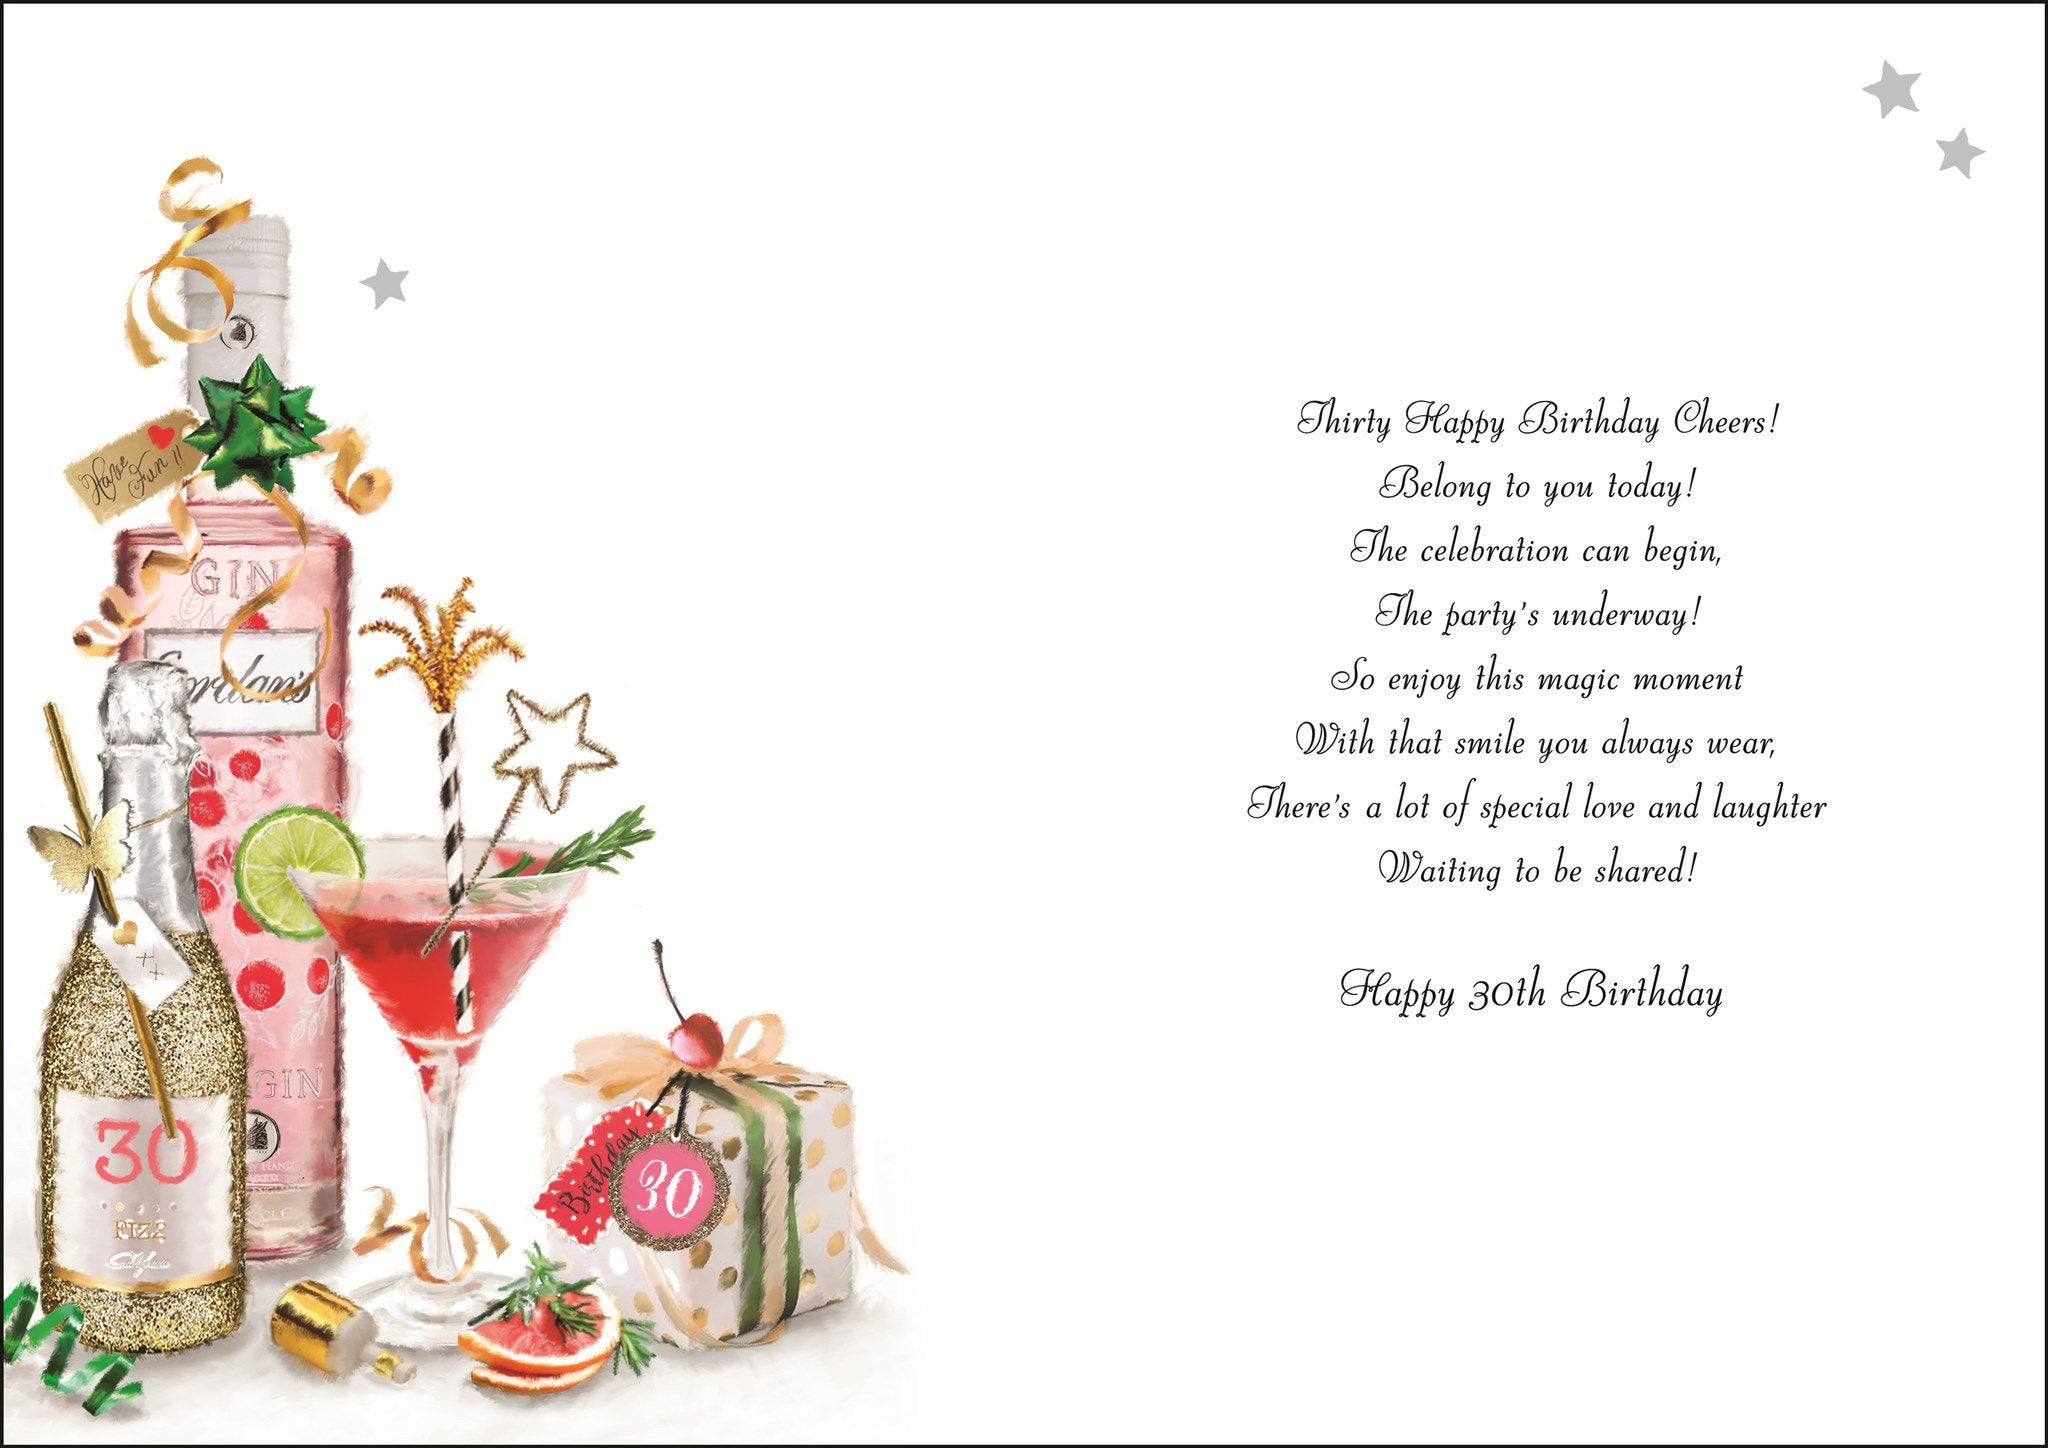 Inside of 30th Birthday Gin Birthday Greetings Card